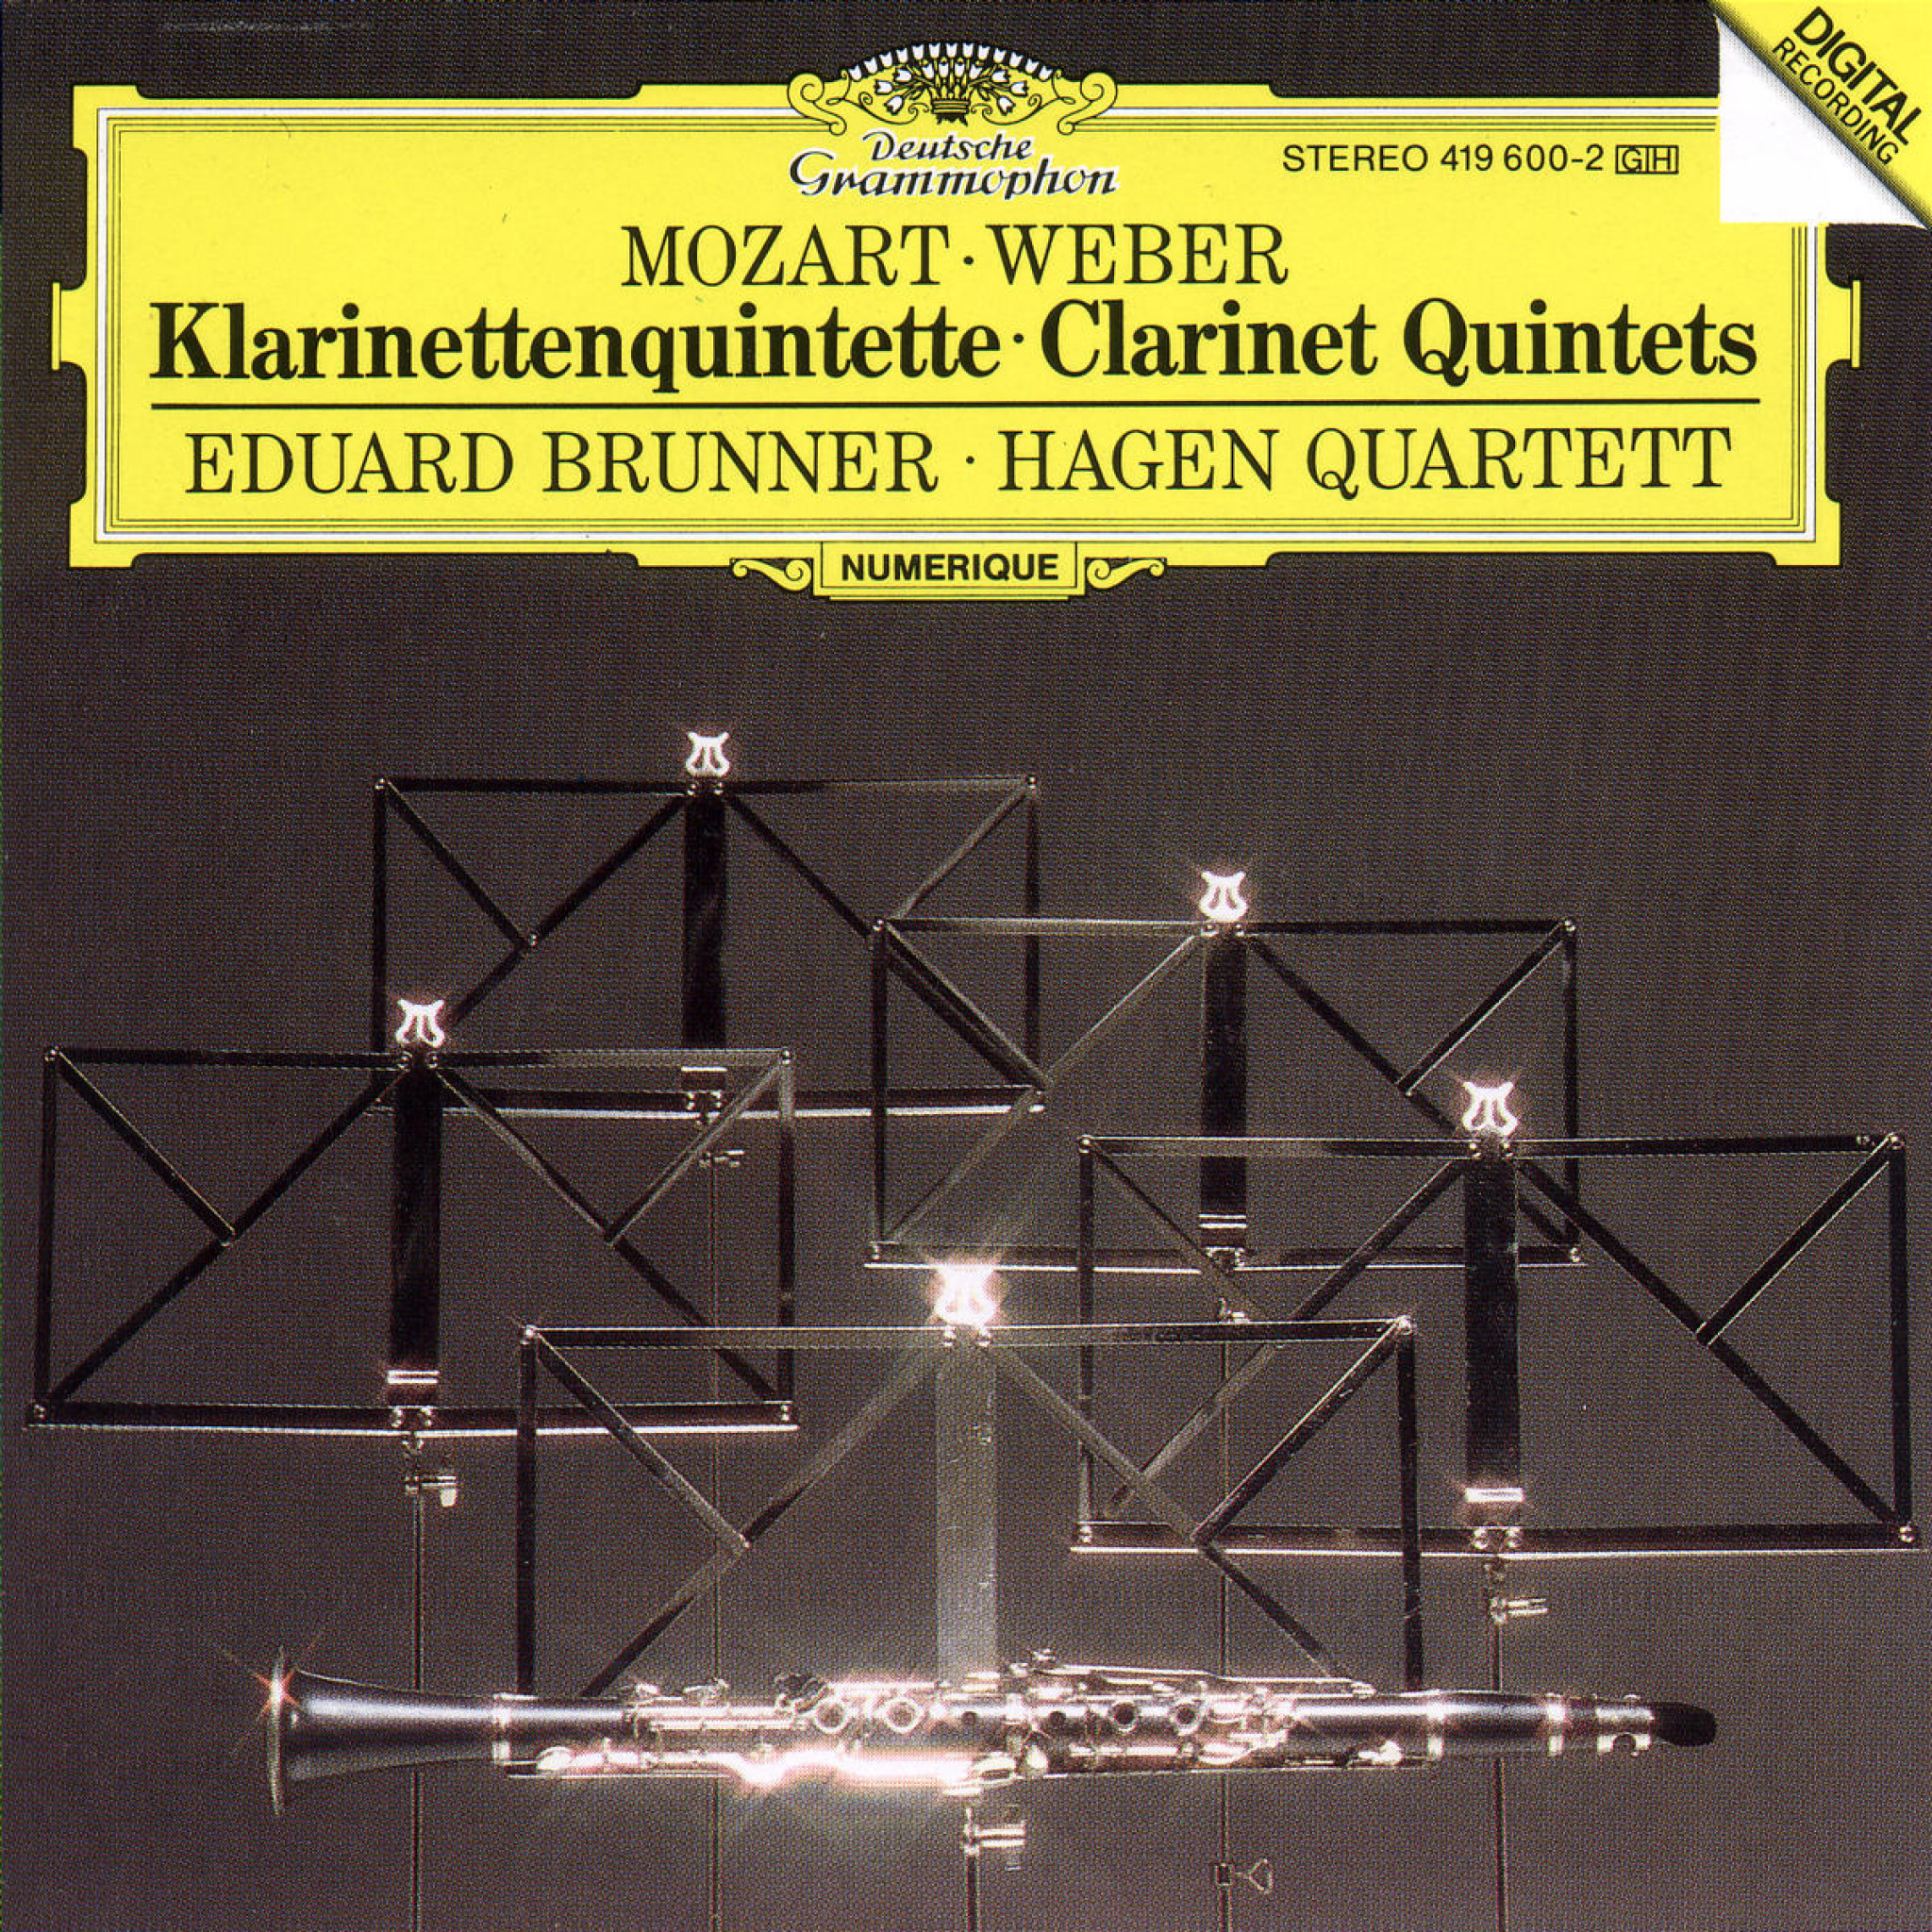 MOZART, WEBER Clarinet Quintets / Hagen Quartett